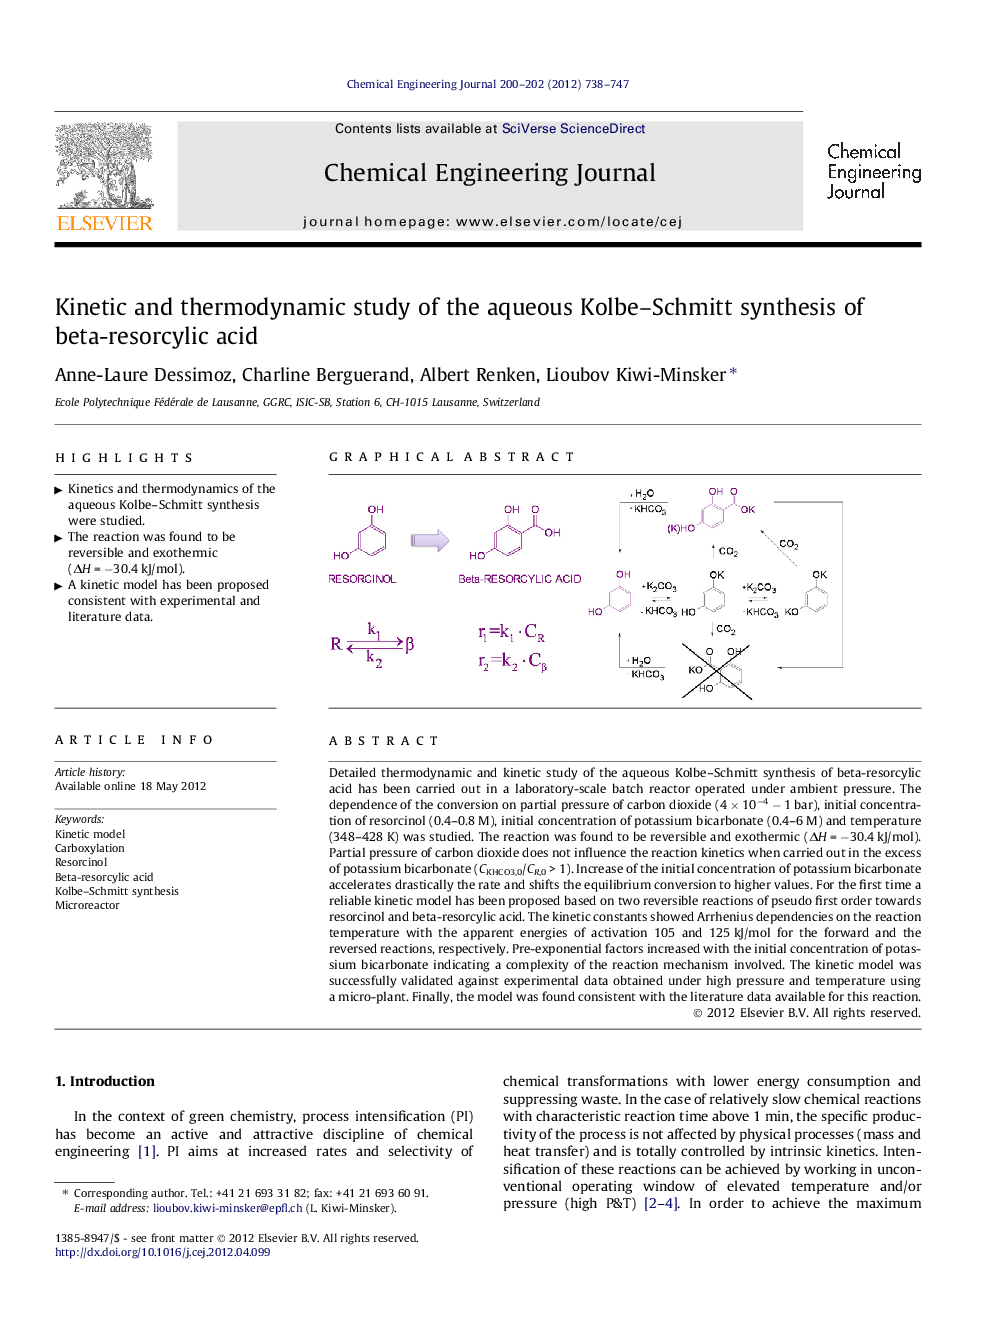 Kinetic and thermodynamic study of the aqueous Kolbe–Schmitt synthesis of beta-resorcylic acid